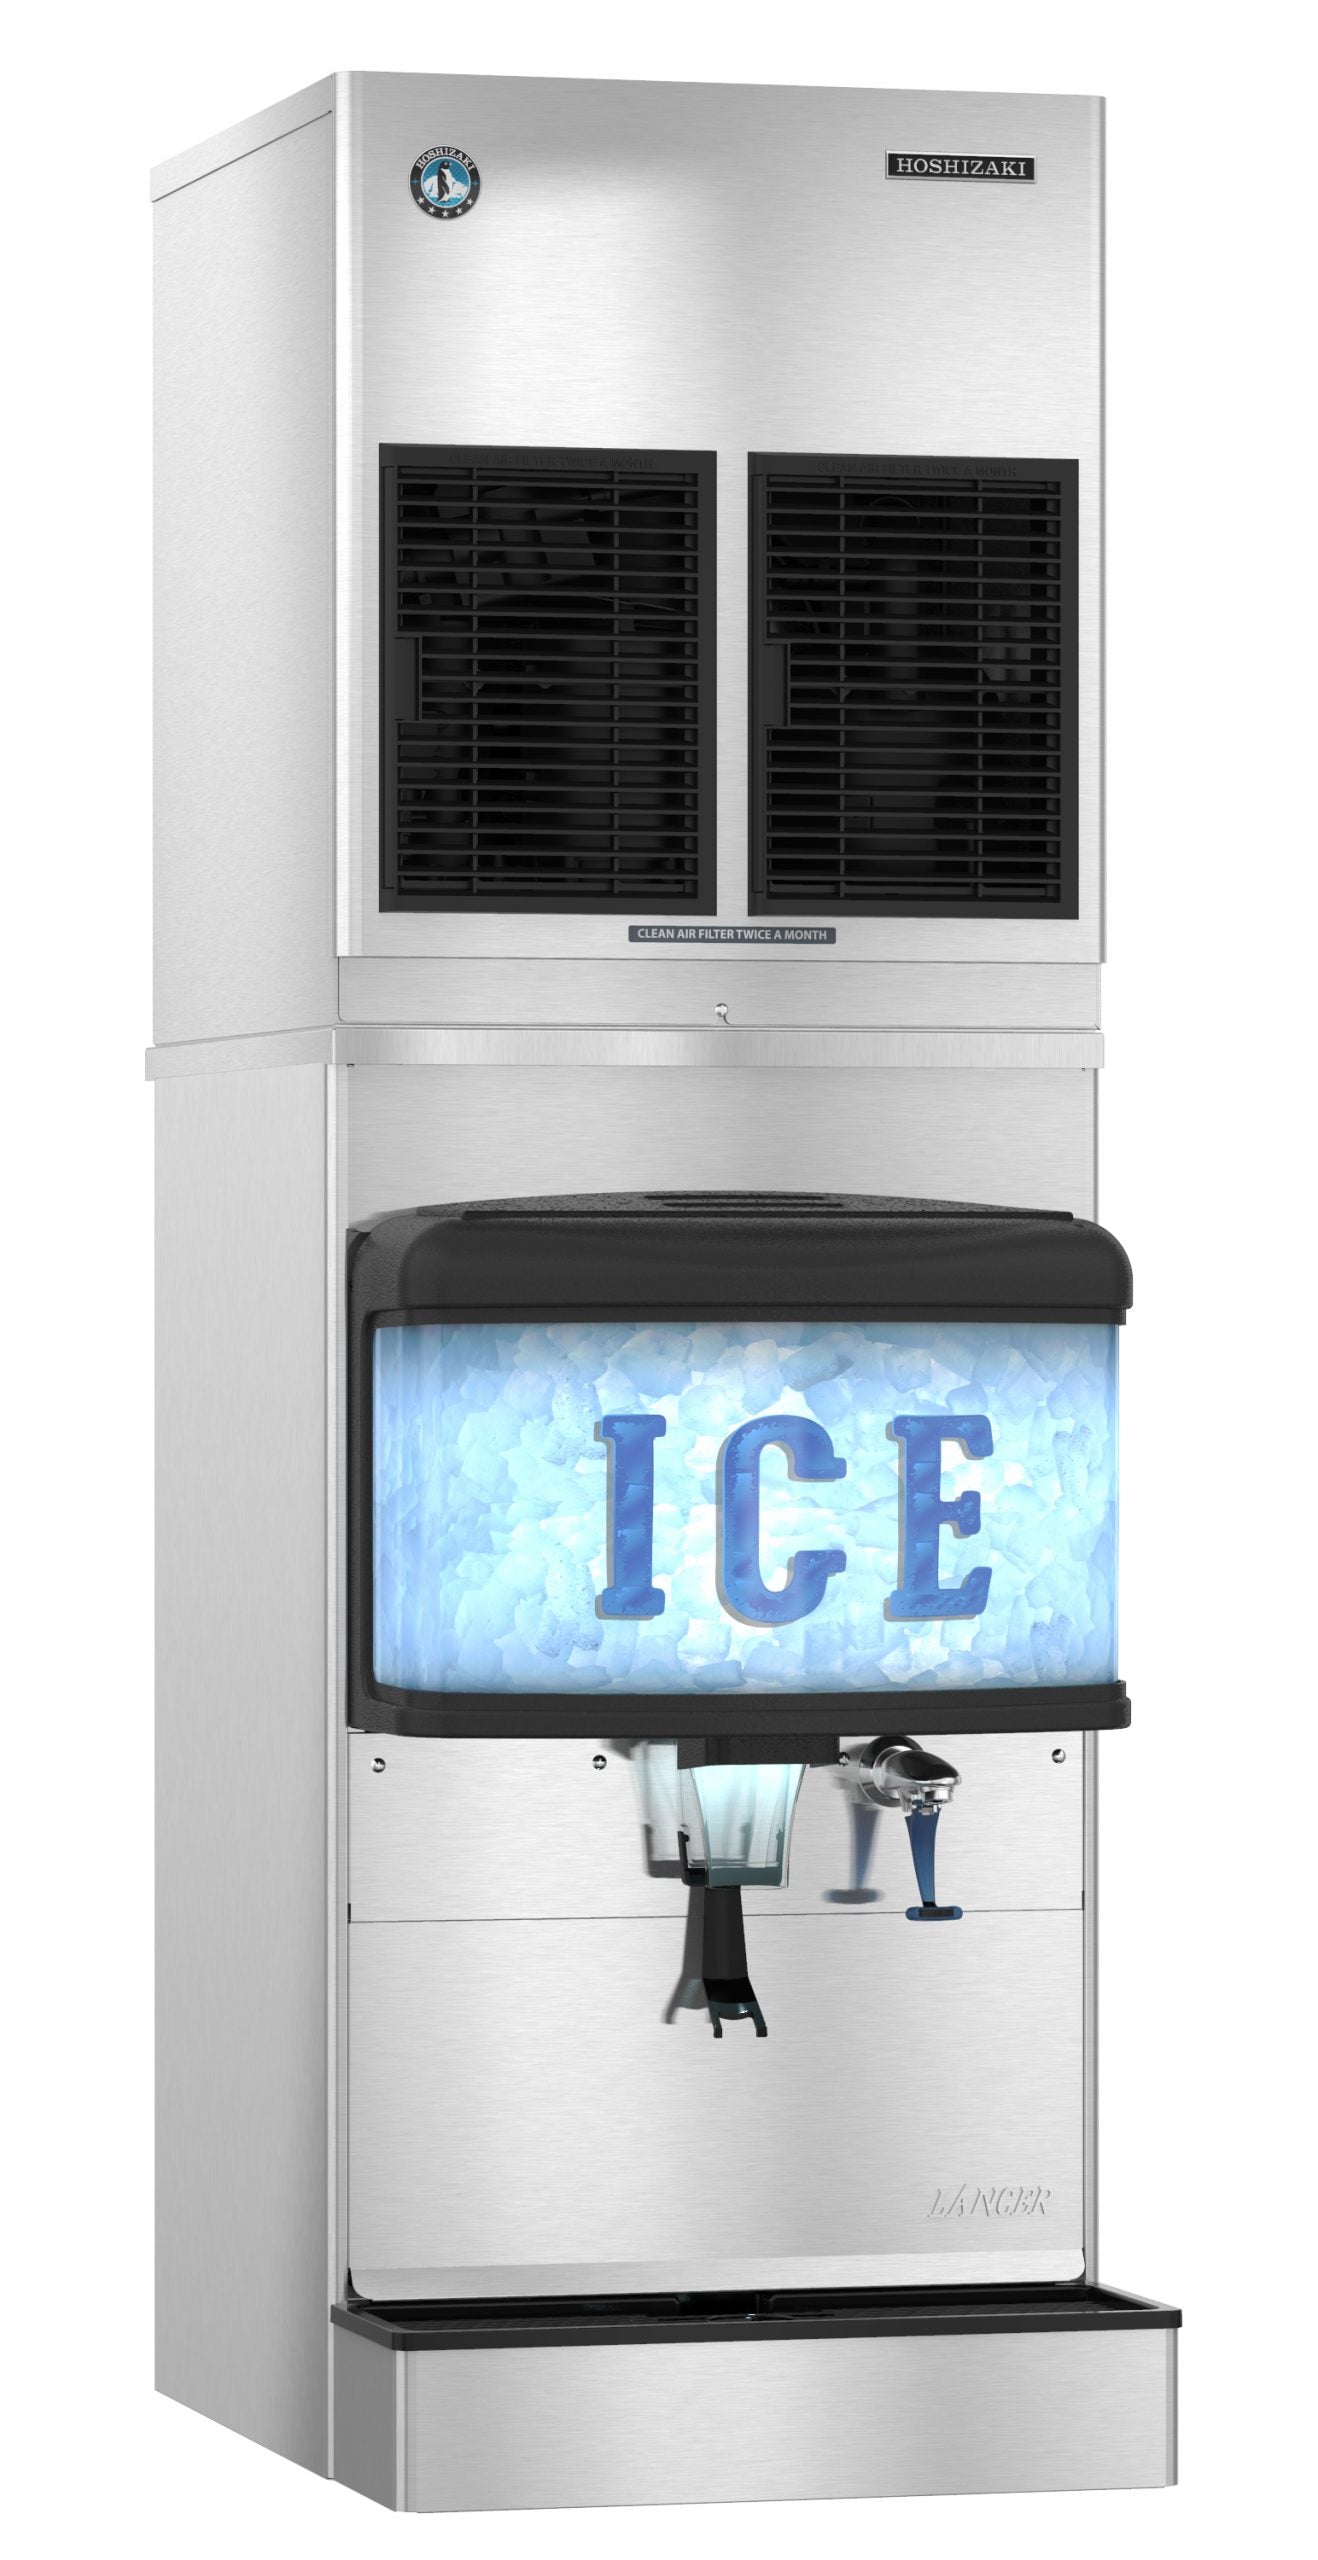 Hoshizaki DM-4420N | 22" Wide Countertop Cubelet Ice & Water Dispenser